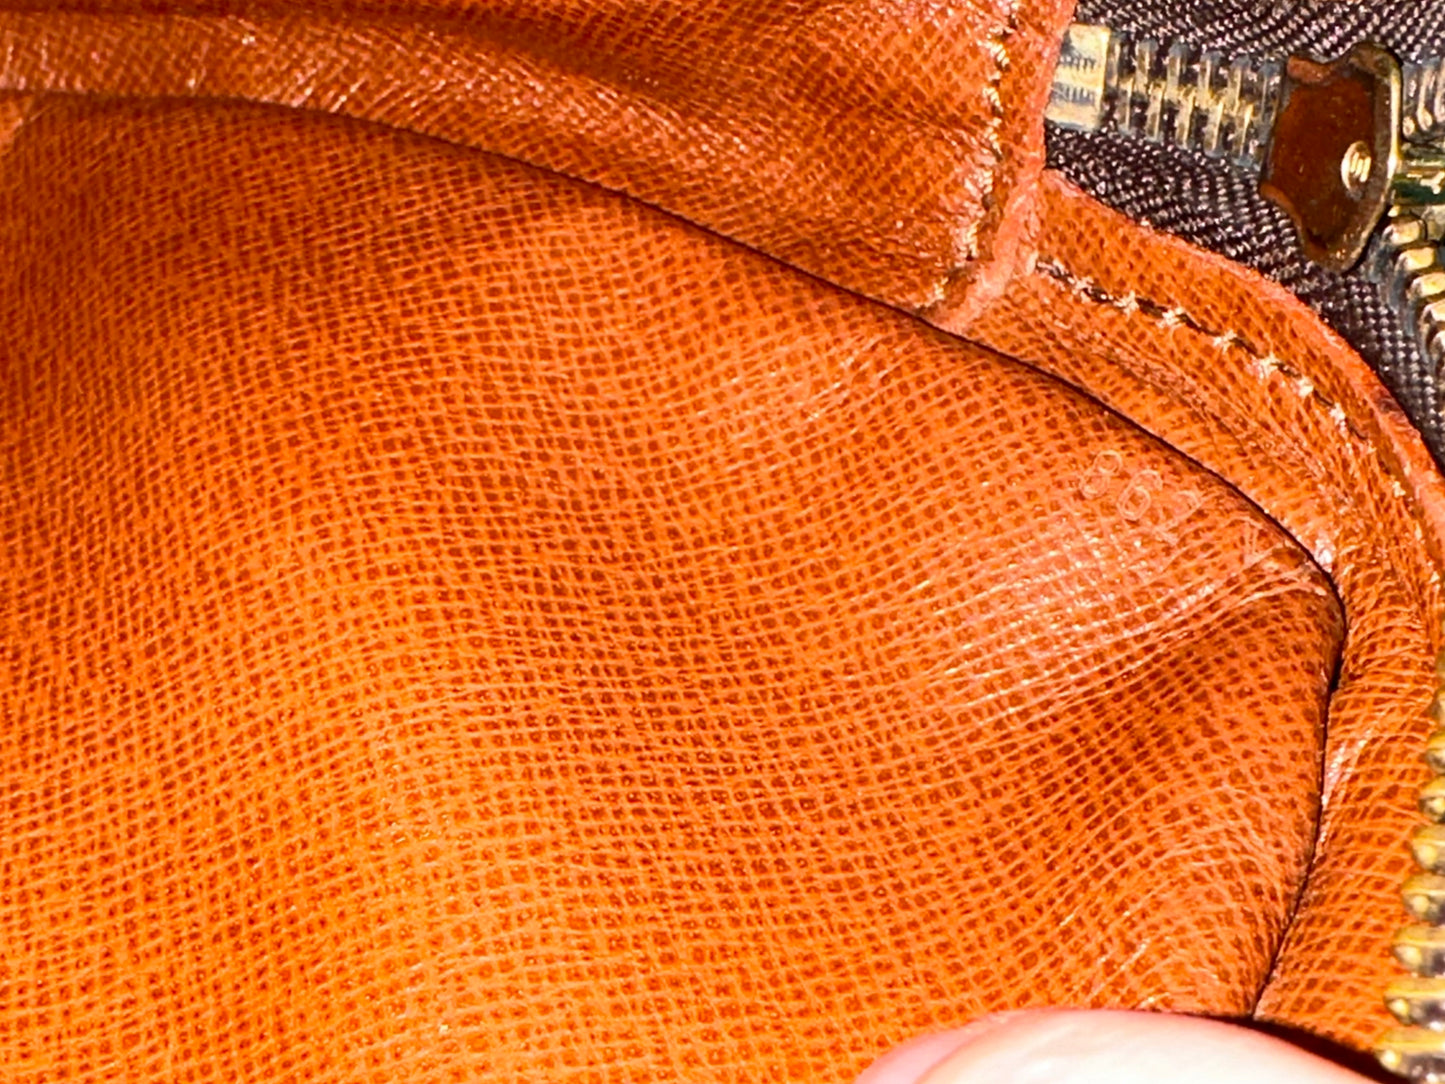 Pre-owned Authentic Louis Vuitton Jeune Fille MM Monogram Crossbody Bag